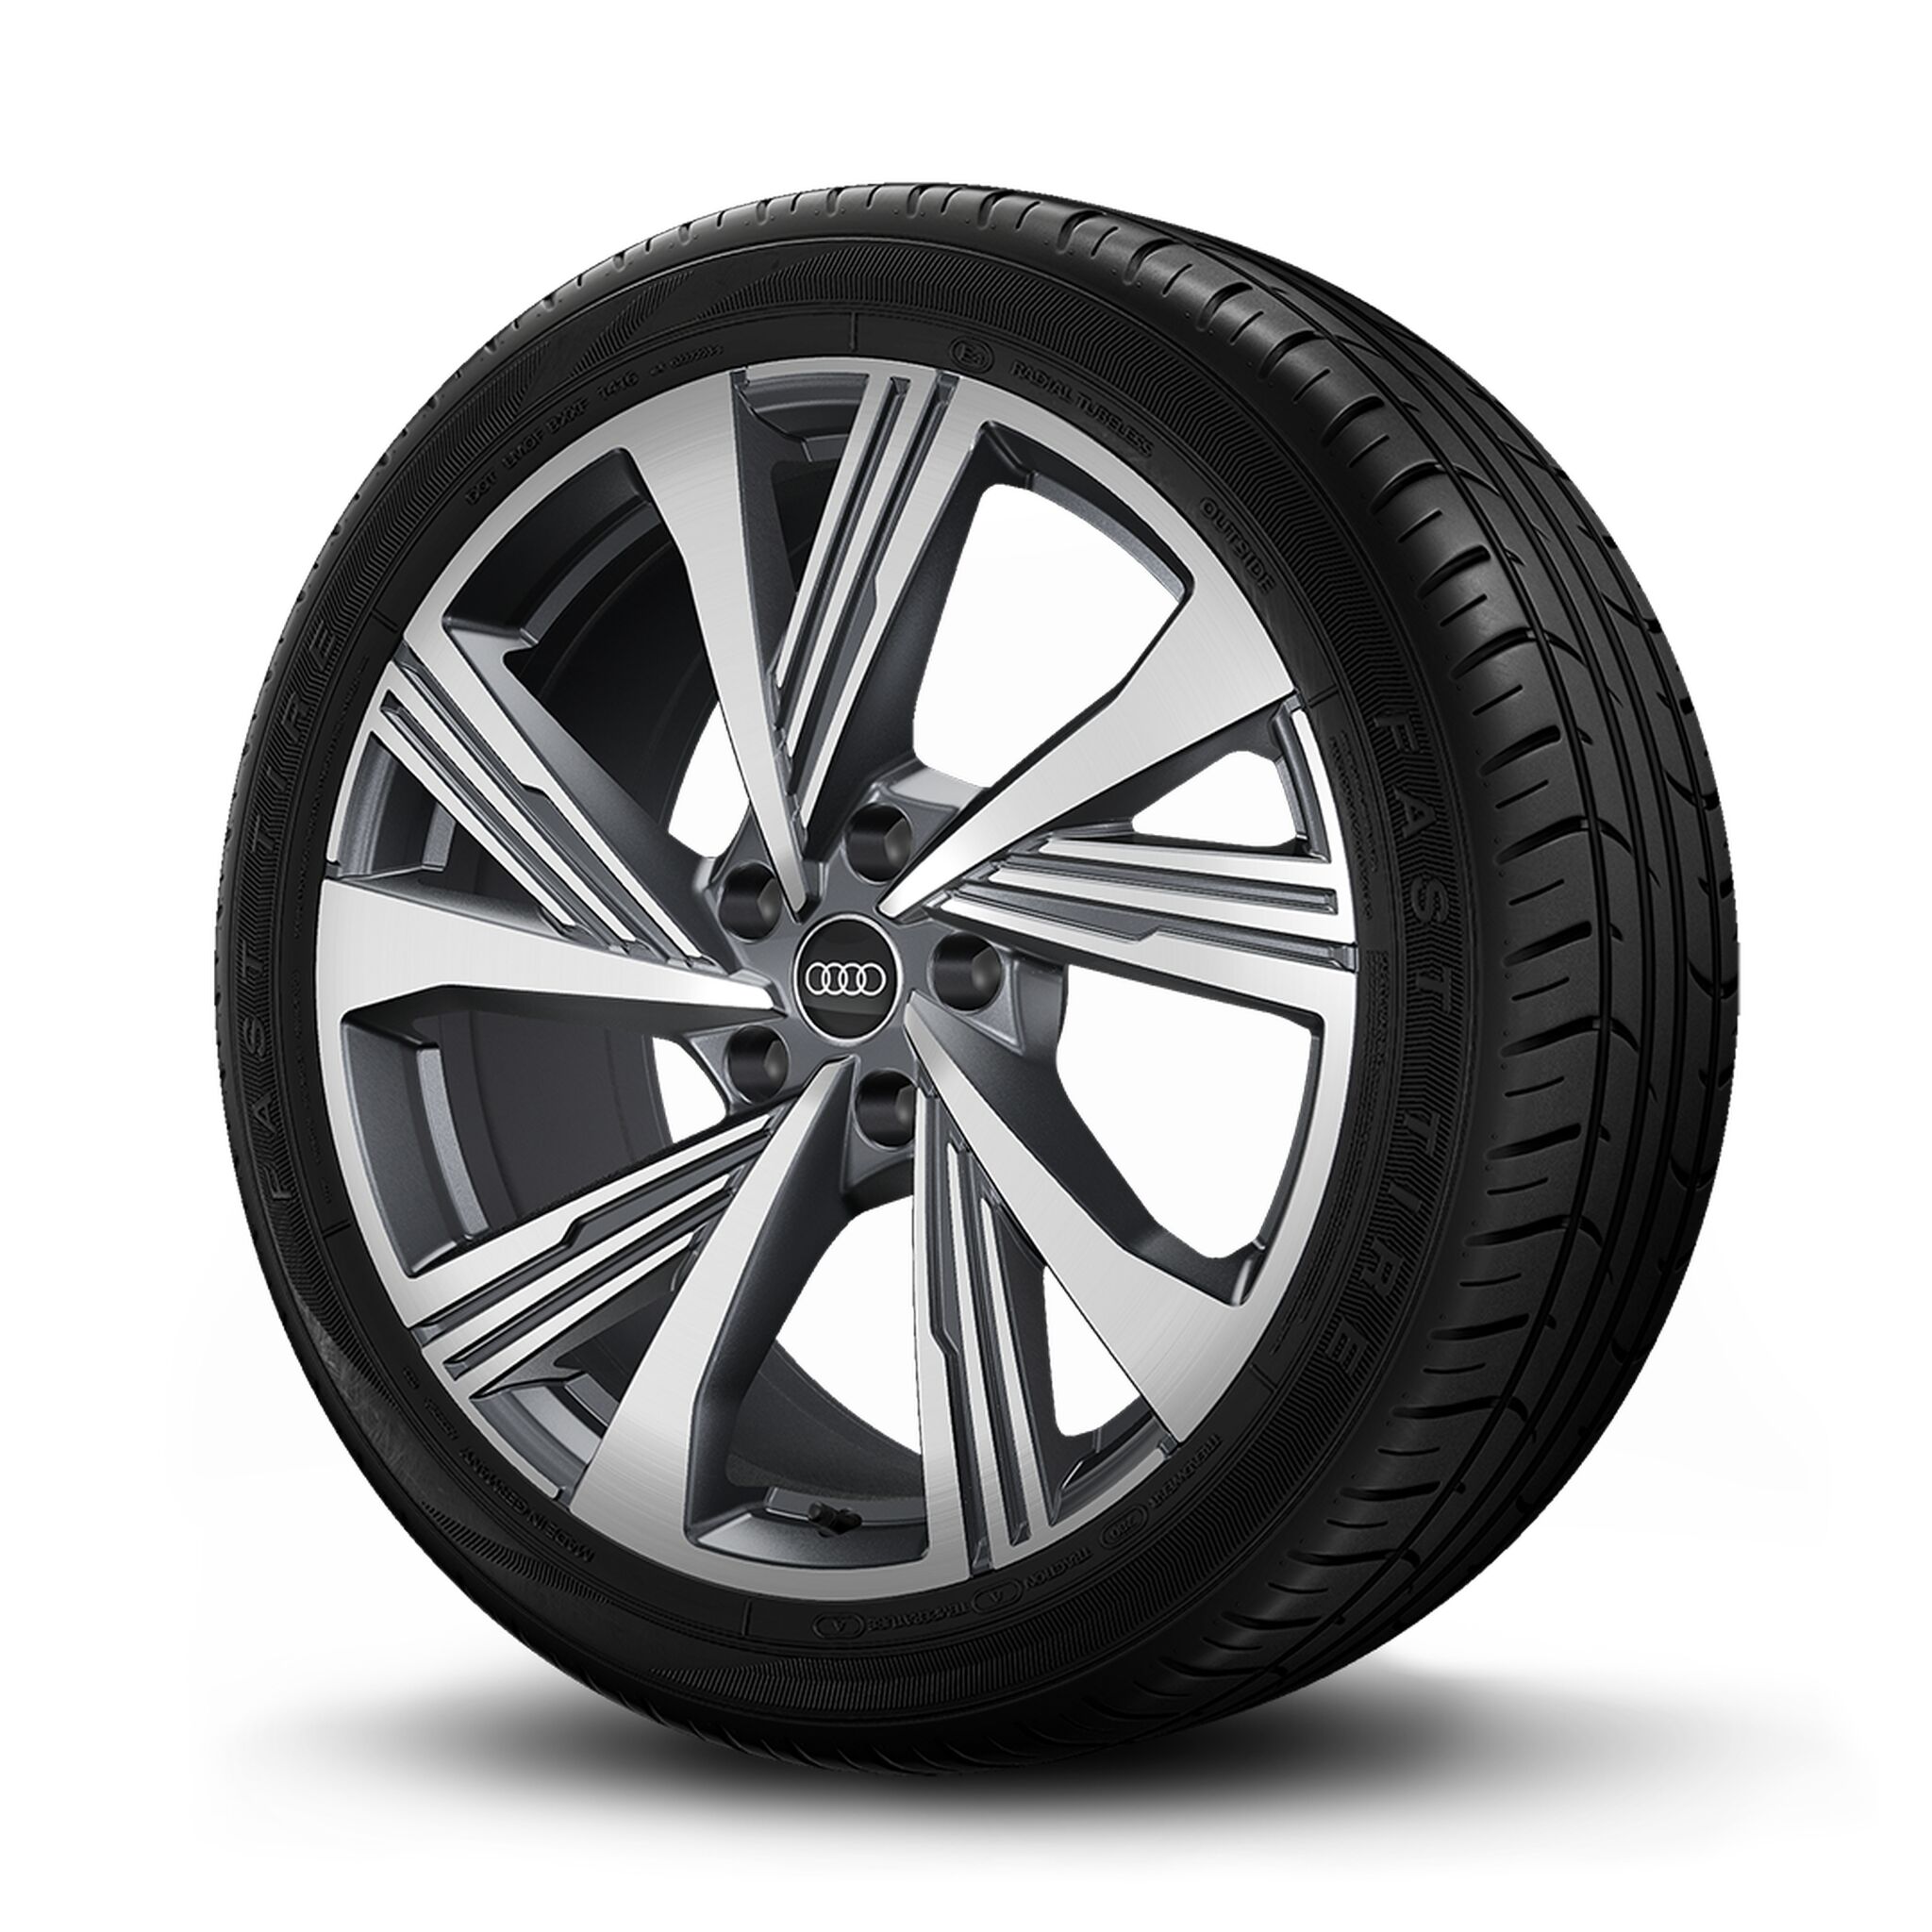 Wheels, 5 V-spoke structure, graphite gray, high-sheen, 9.0J|10.0Jx21, tires 255/45|285/40 R21